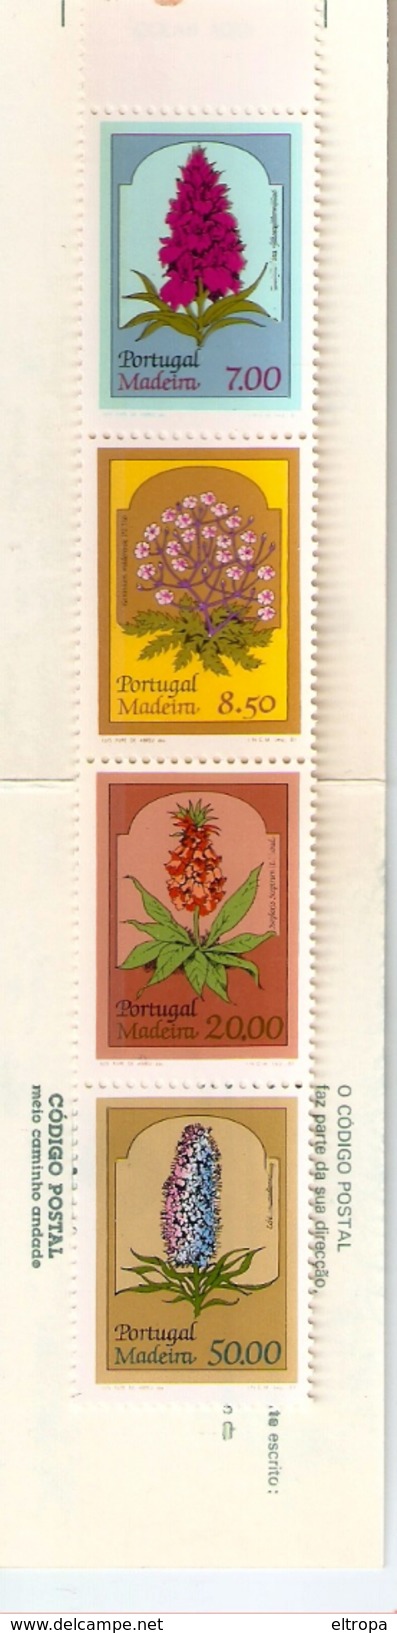 PORTUGAL 1981 Madeira Flowers Mint Complete Stamp Booklet - Markenheftchen